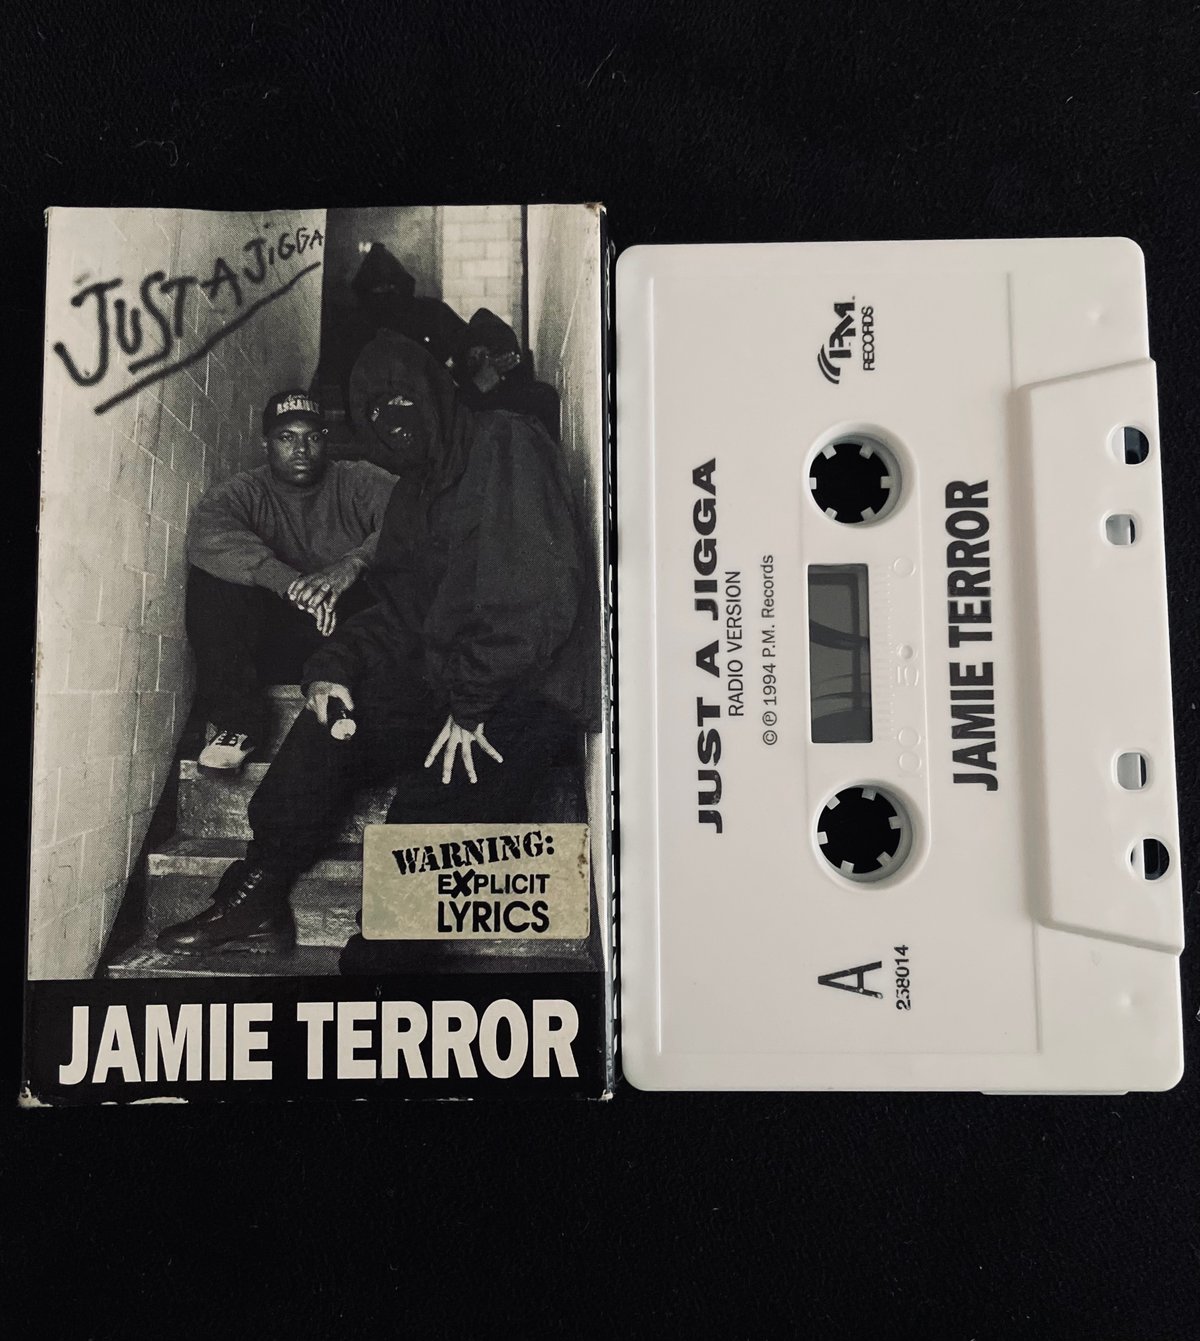 Image of Jamie Terror “Just a Jigga”